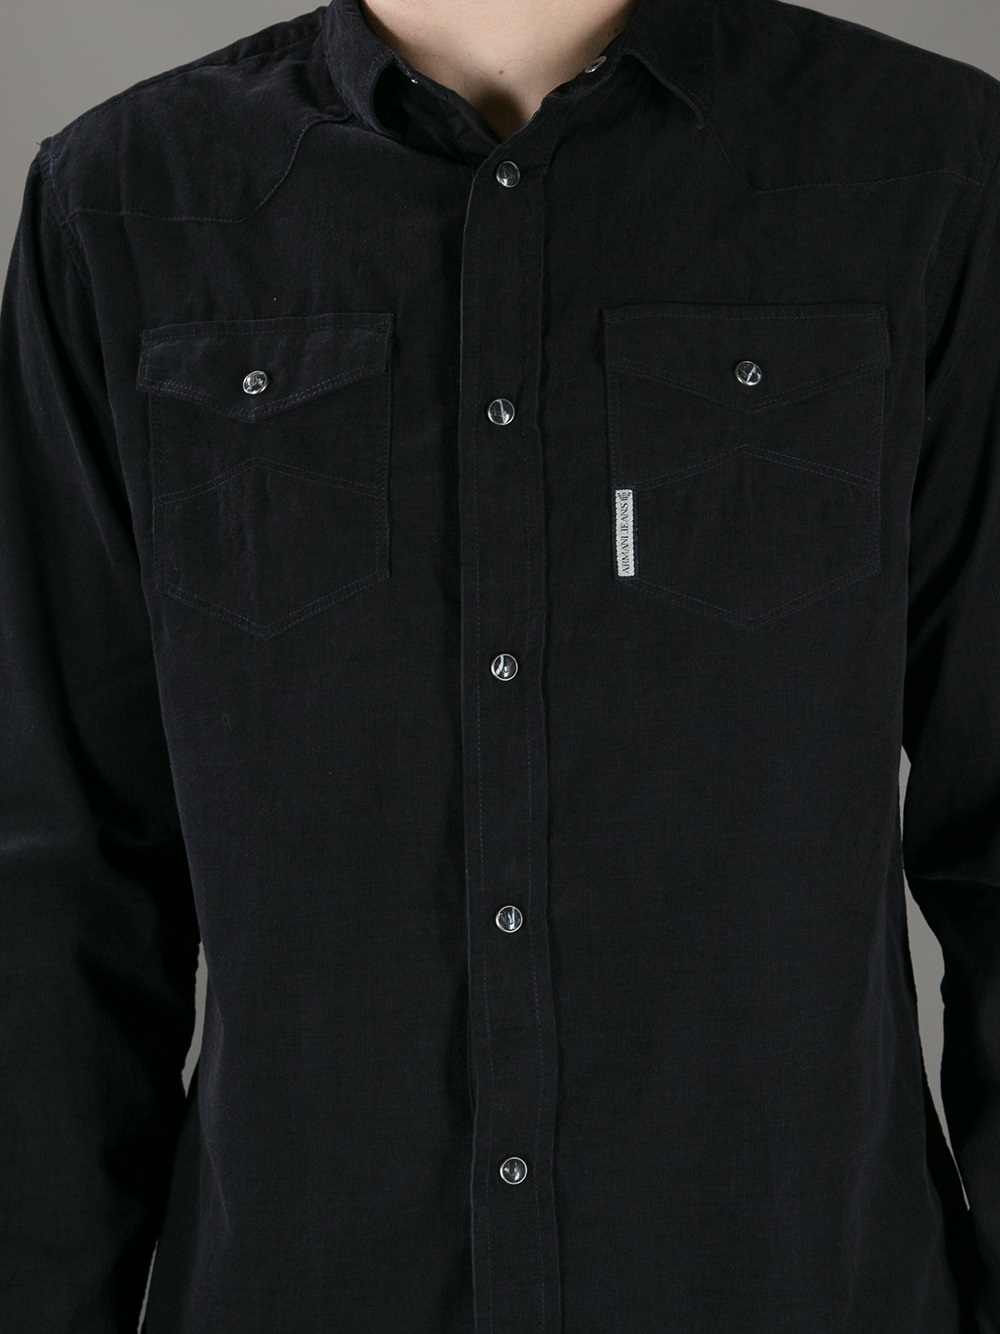 Armani Jeans Corduroy Shirt in Black 